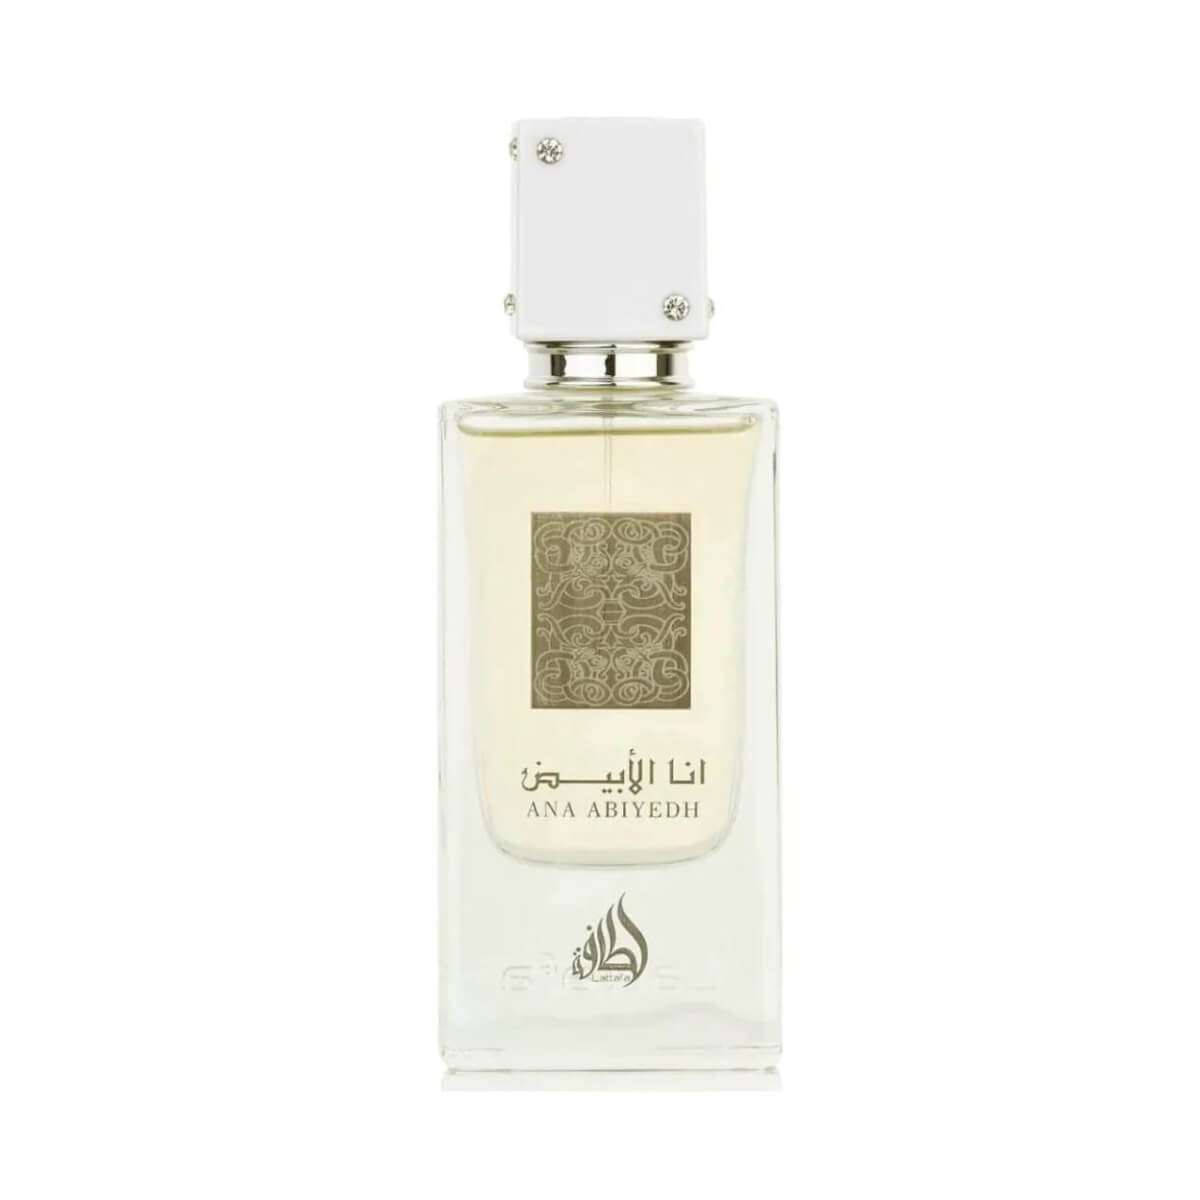 Ana Abiyedh (I Am White) Perfume Eau De Parfume 60Ml By Lattafa